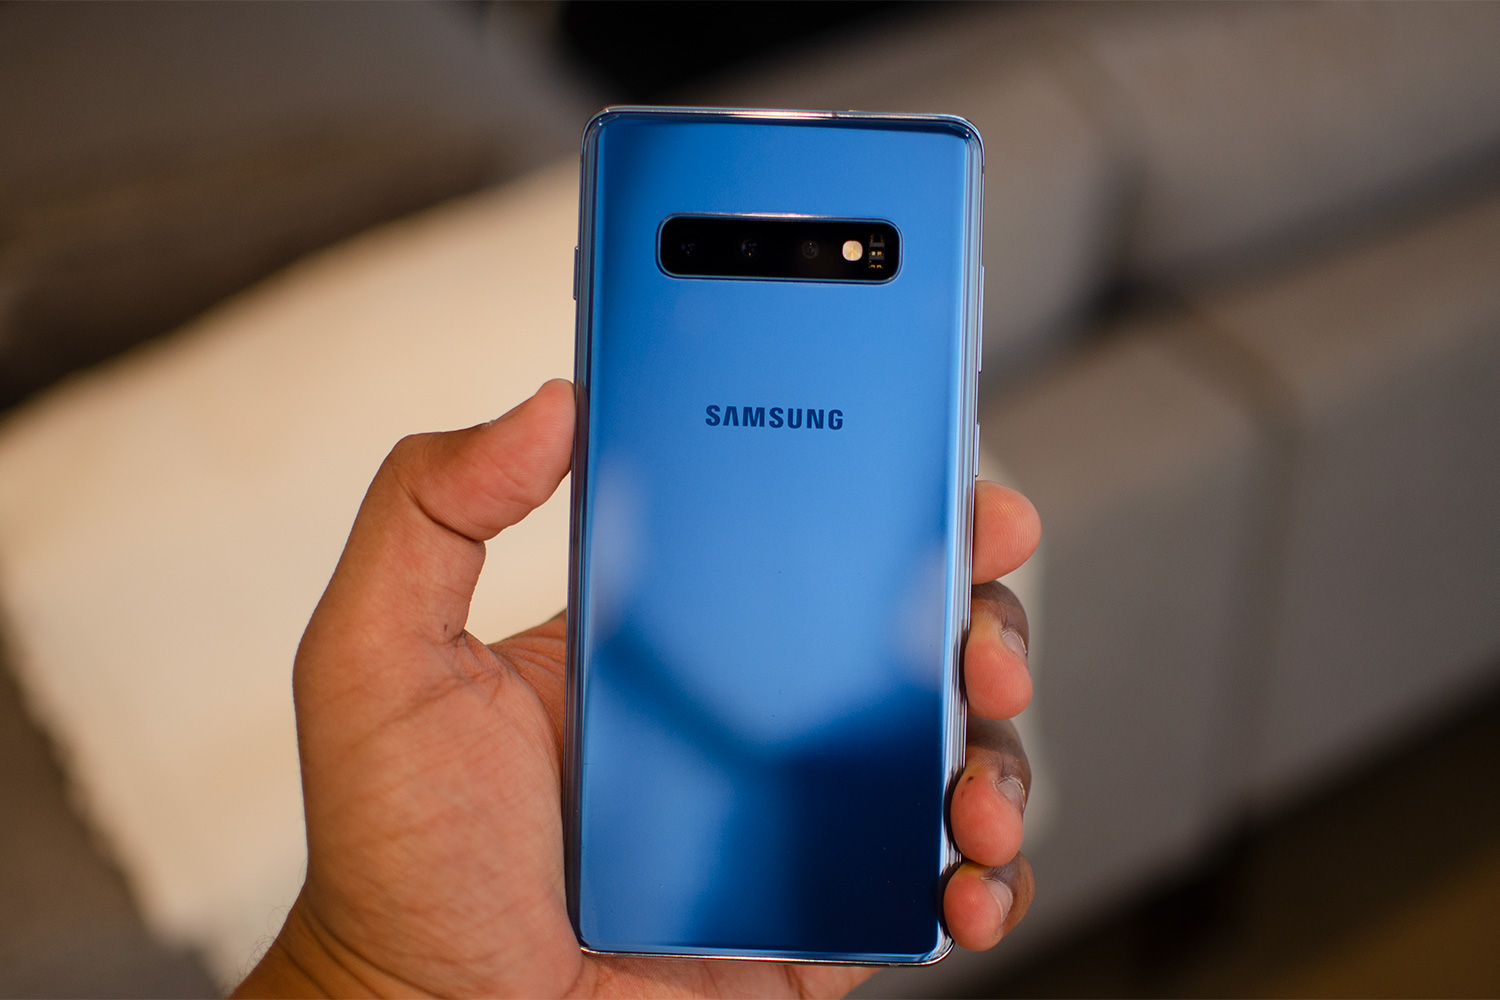 Samsung Galaxy s10 plus hands-on